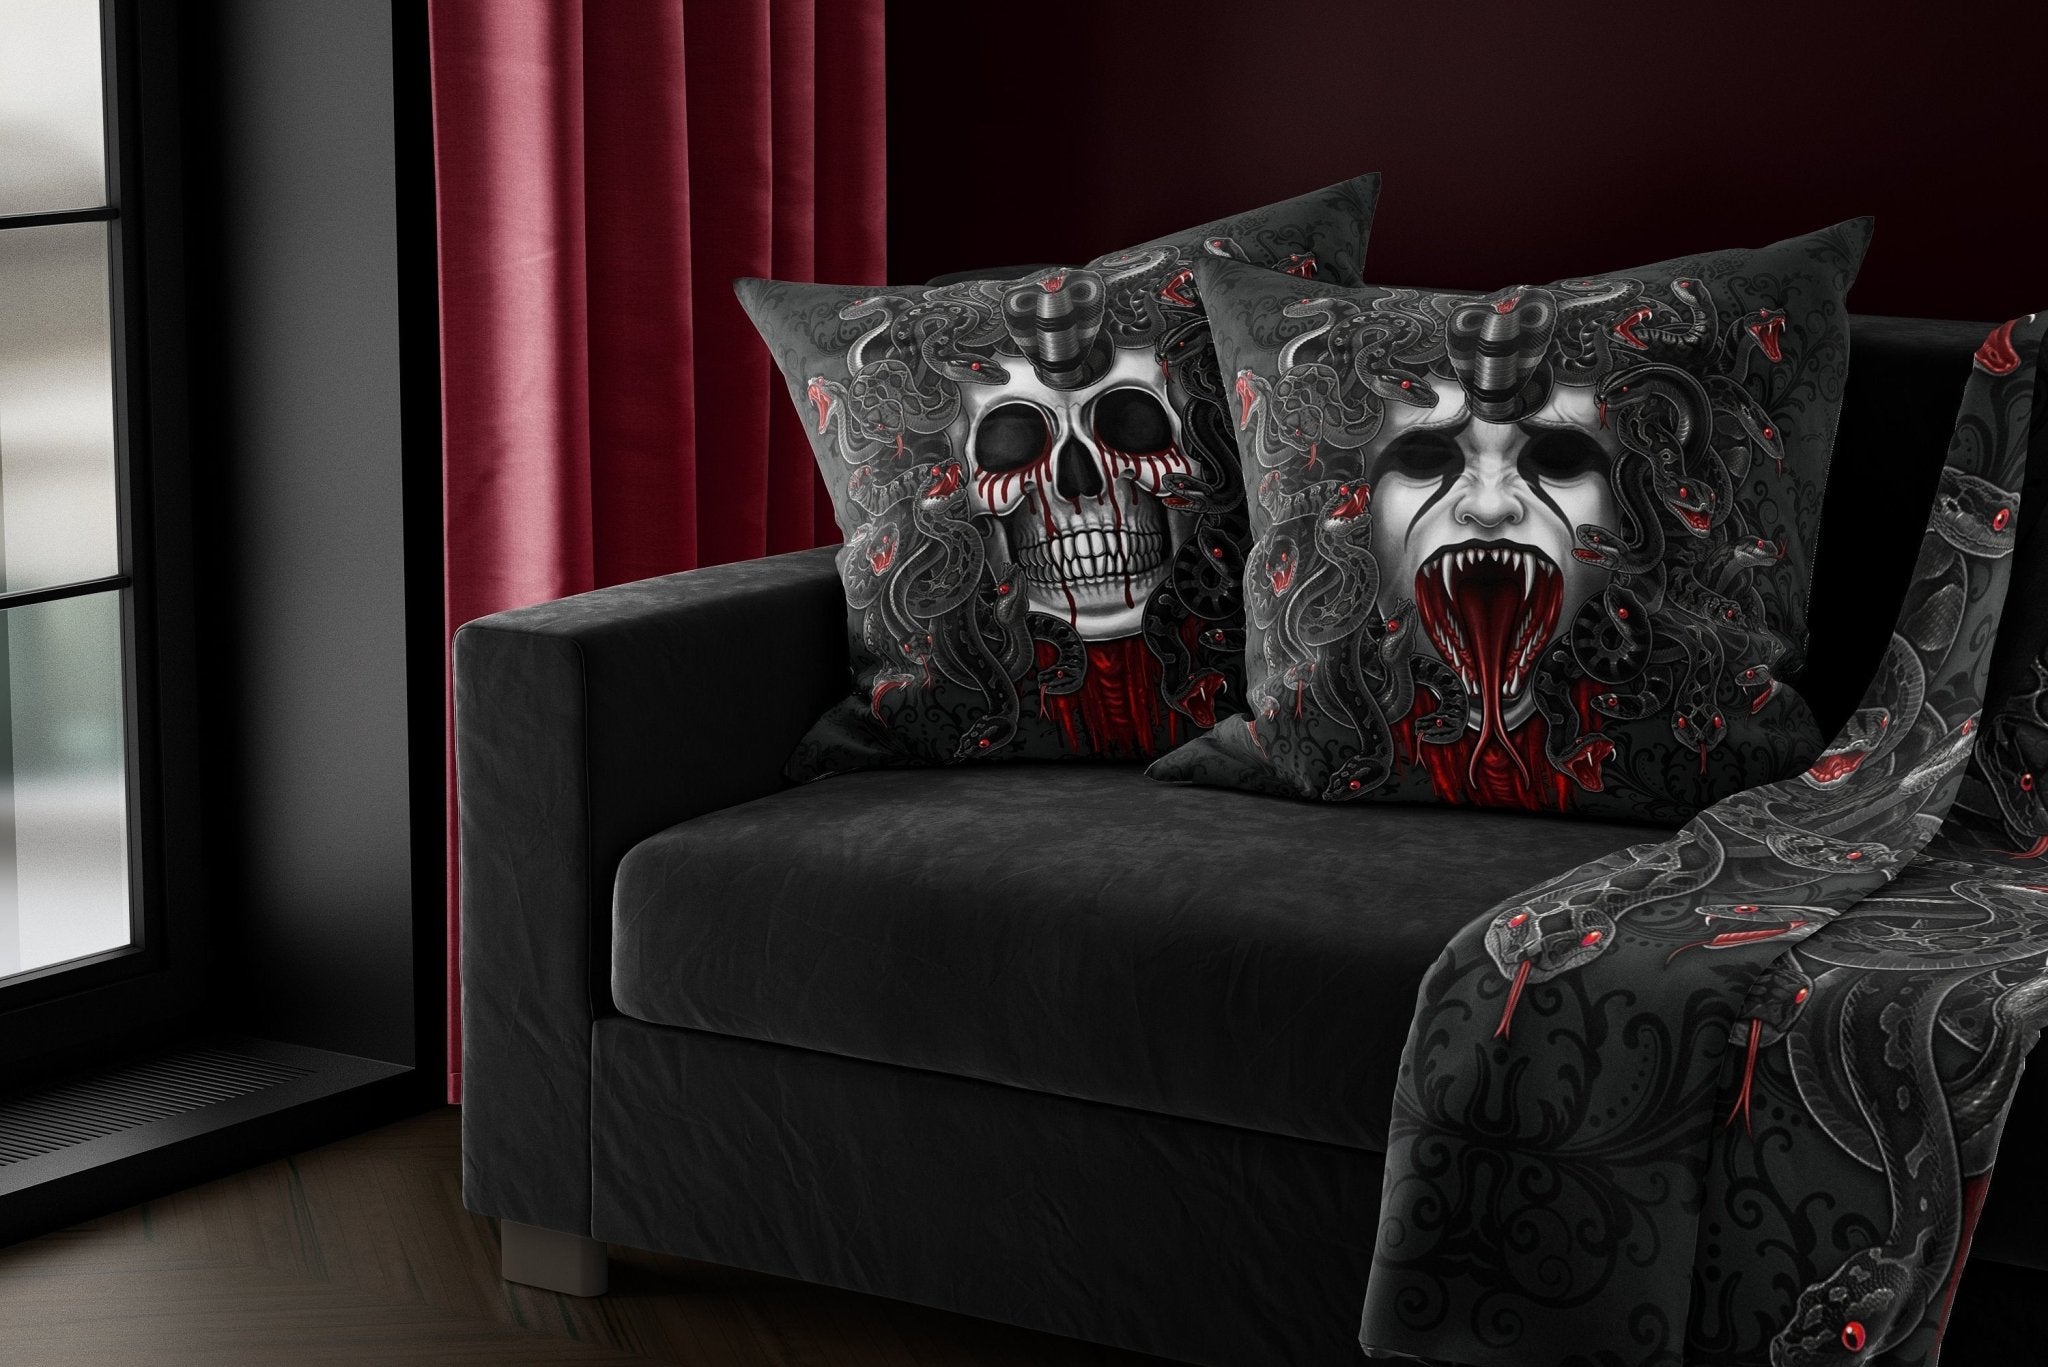 Skull Throw Pillow, Decorative Accent Cushion, Medusa, Nu Goth Room Decor, Macabre Art, Alternative Home - Gothic, Black Snakes - Abysm Internal